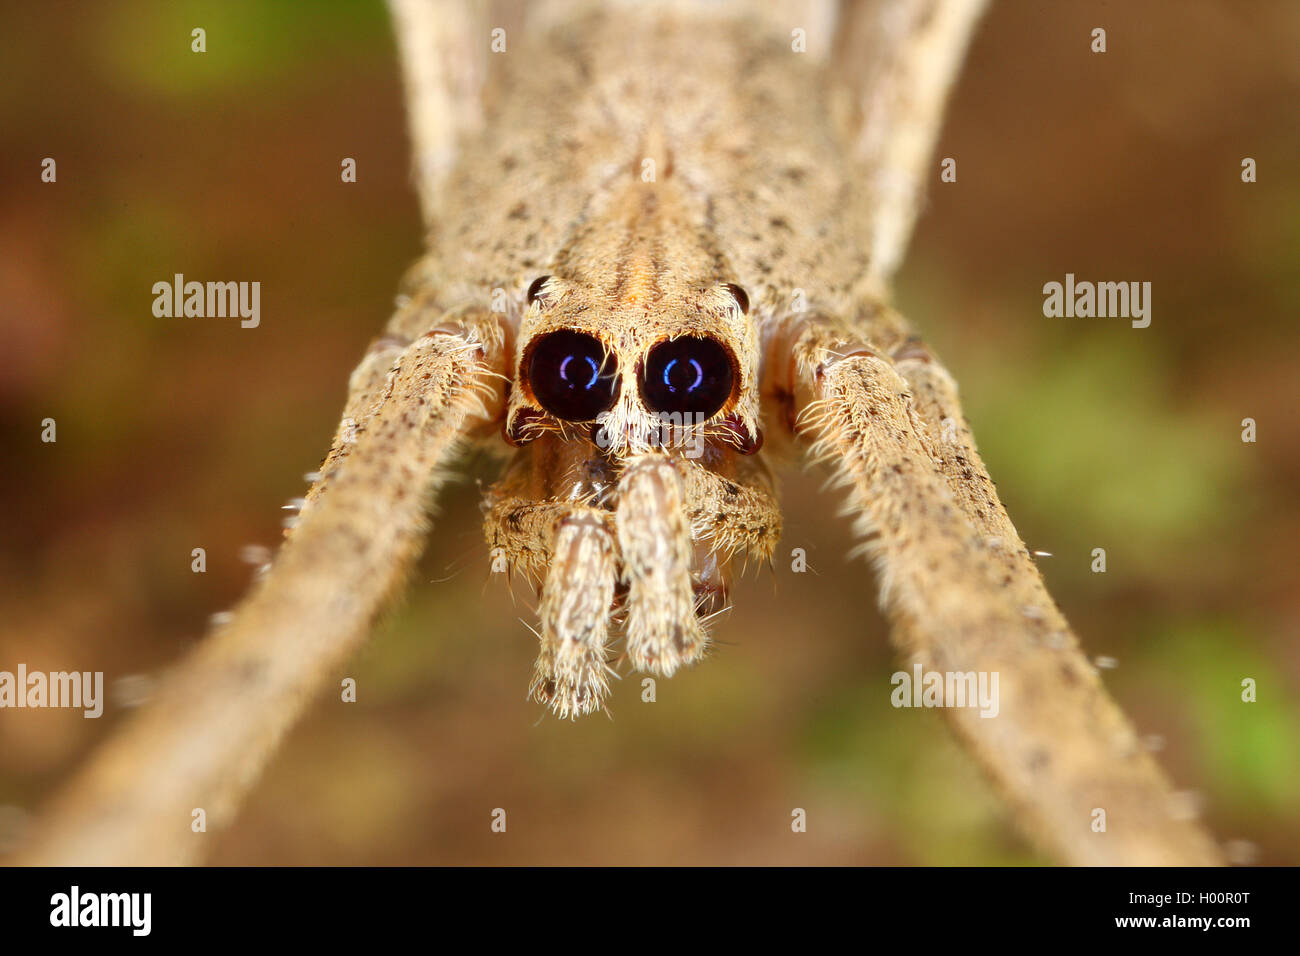 net-casting spider (Deinopis longipes), Portrait, Costa Rica Stock Photo